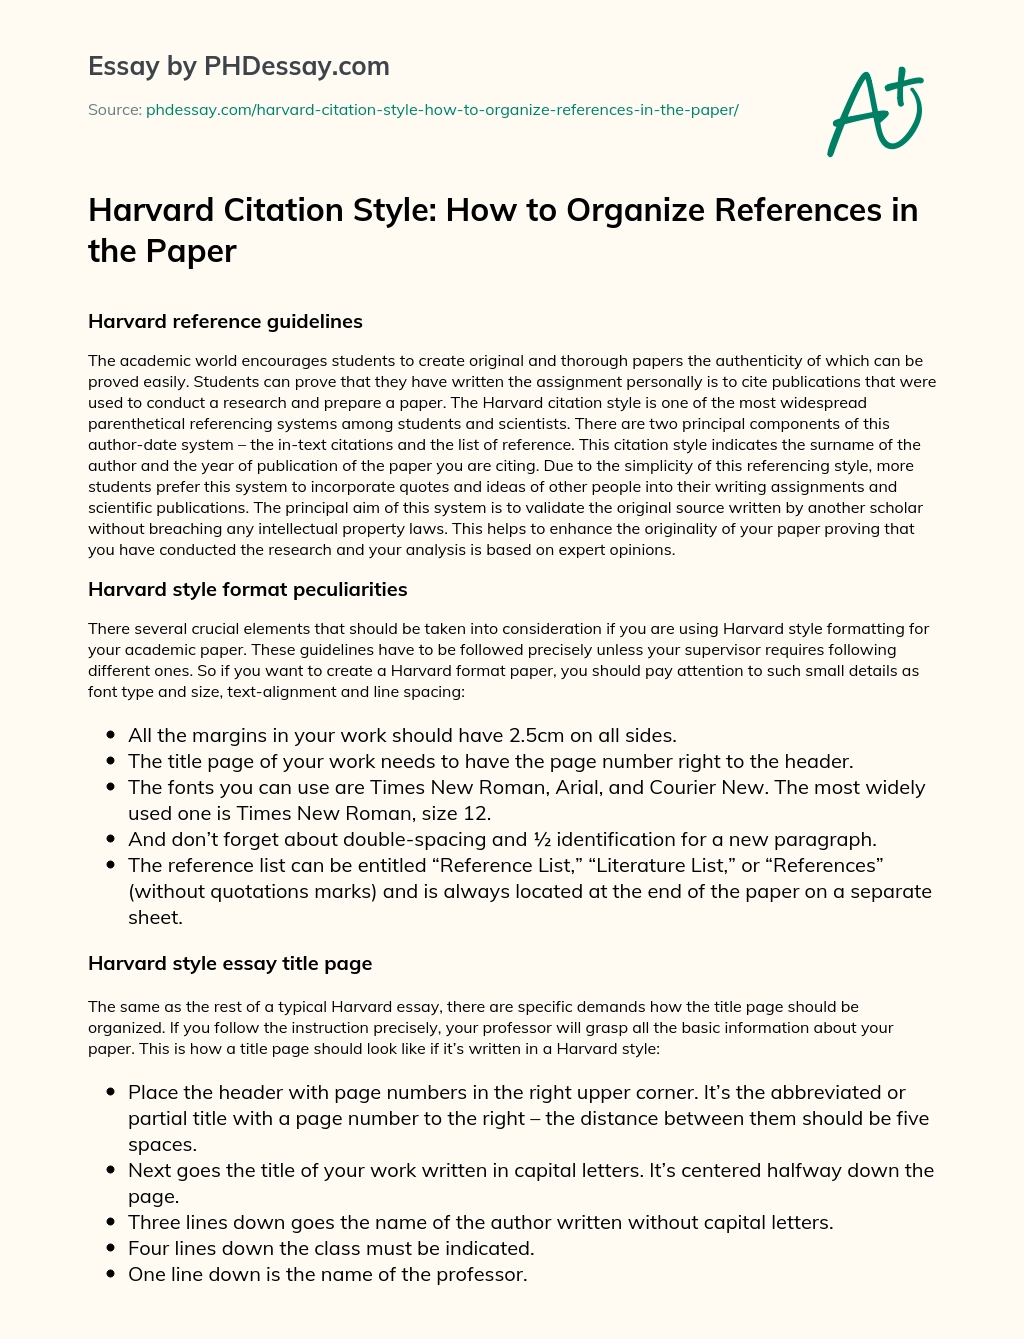 harvard style essay format